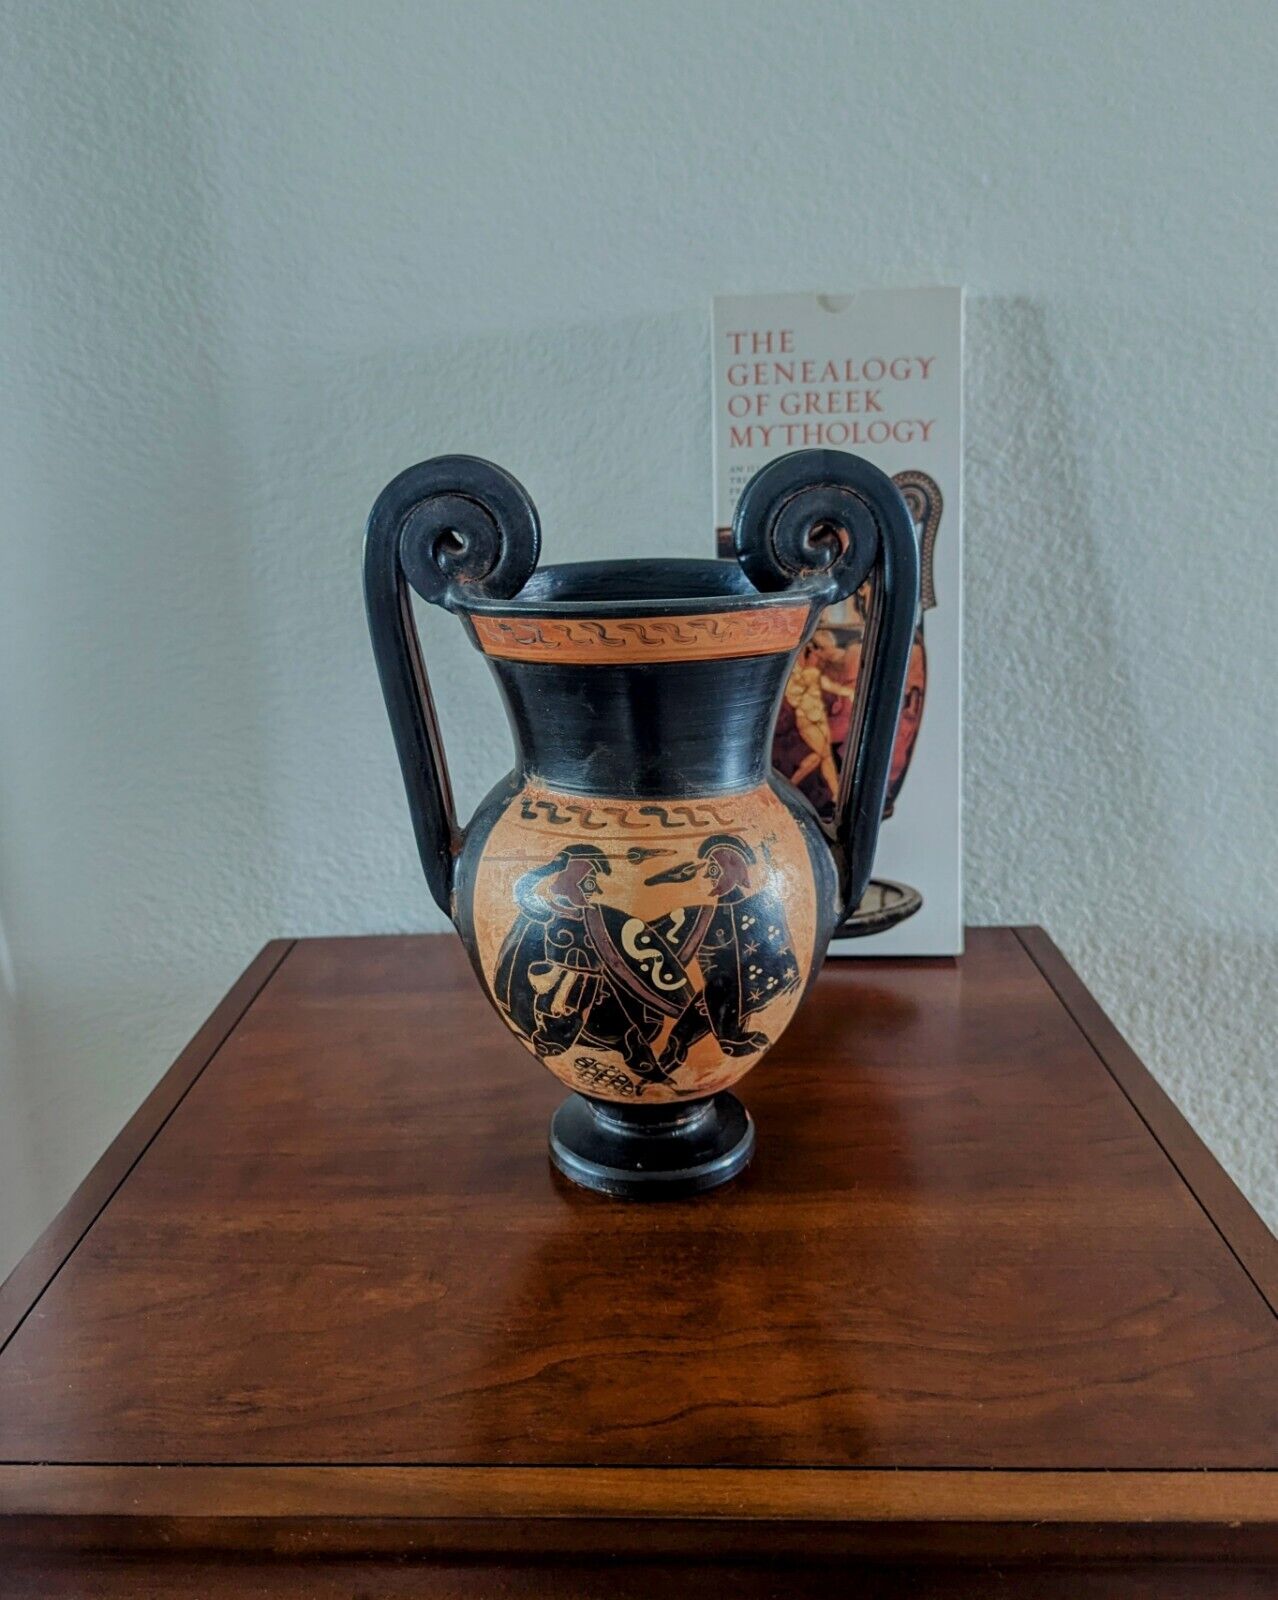 Replica Urn (Amphora) of Greek Warriors (Hoplites)